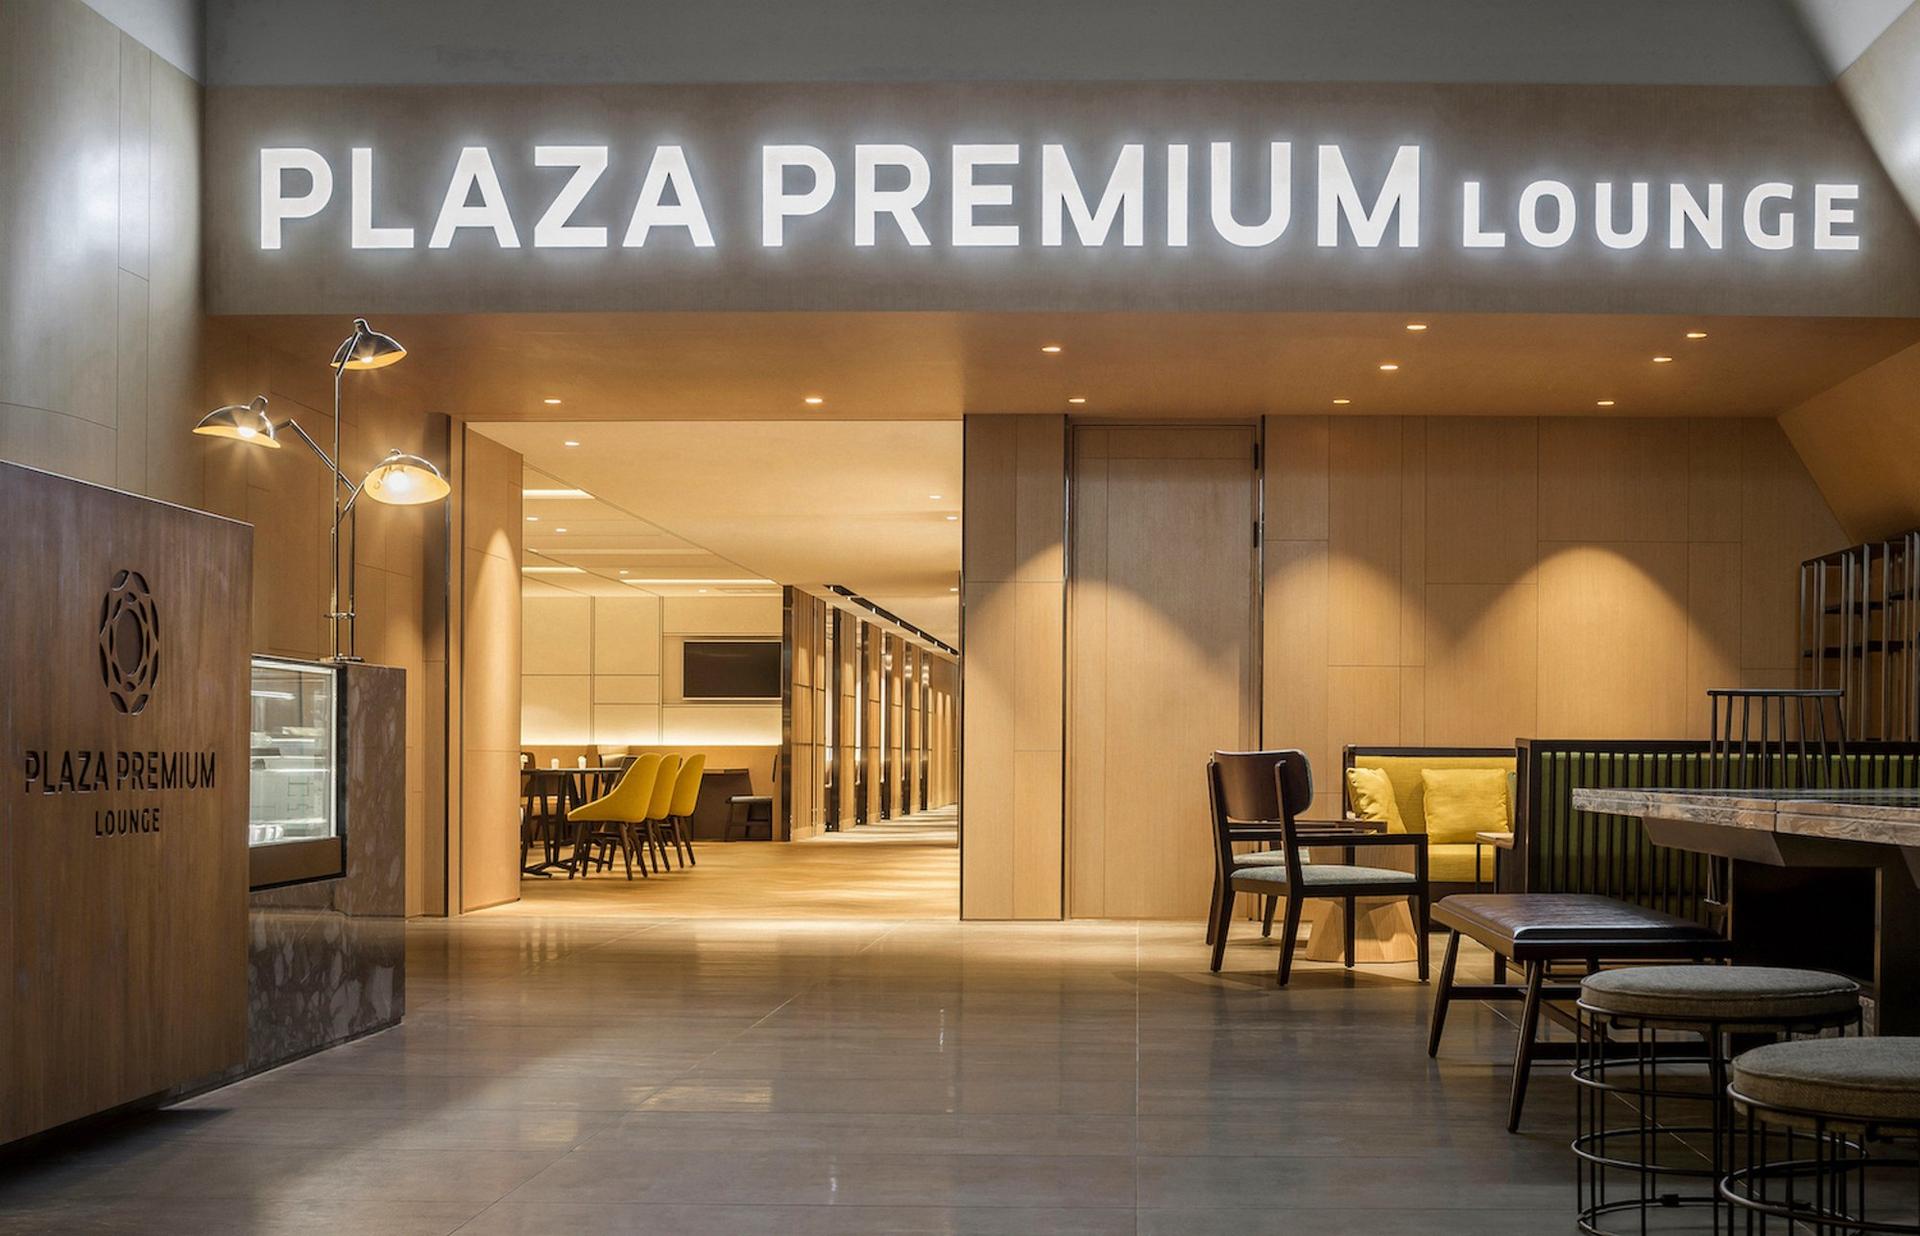 Plaza Premium Lounge (Zone A) image 59 of 99